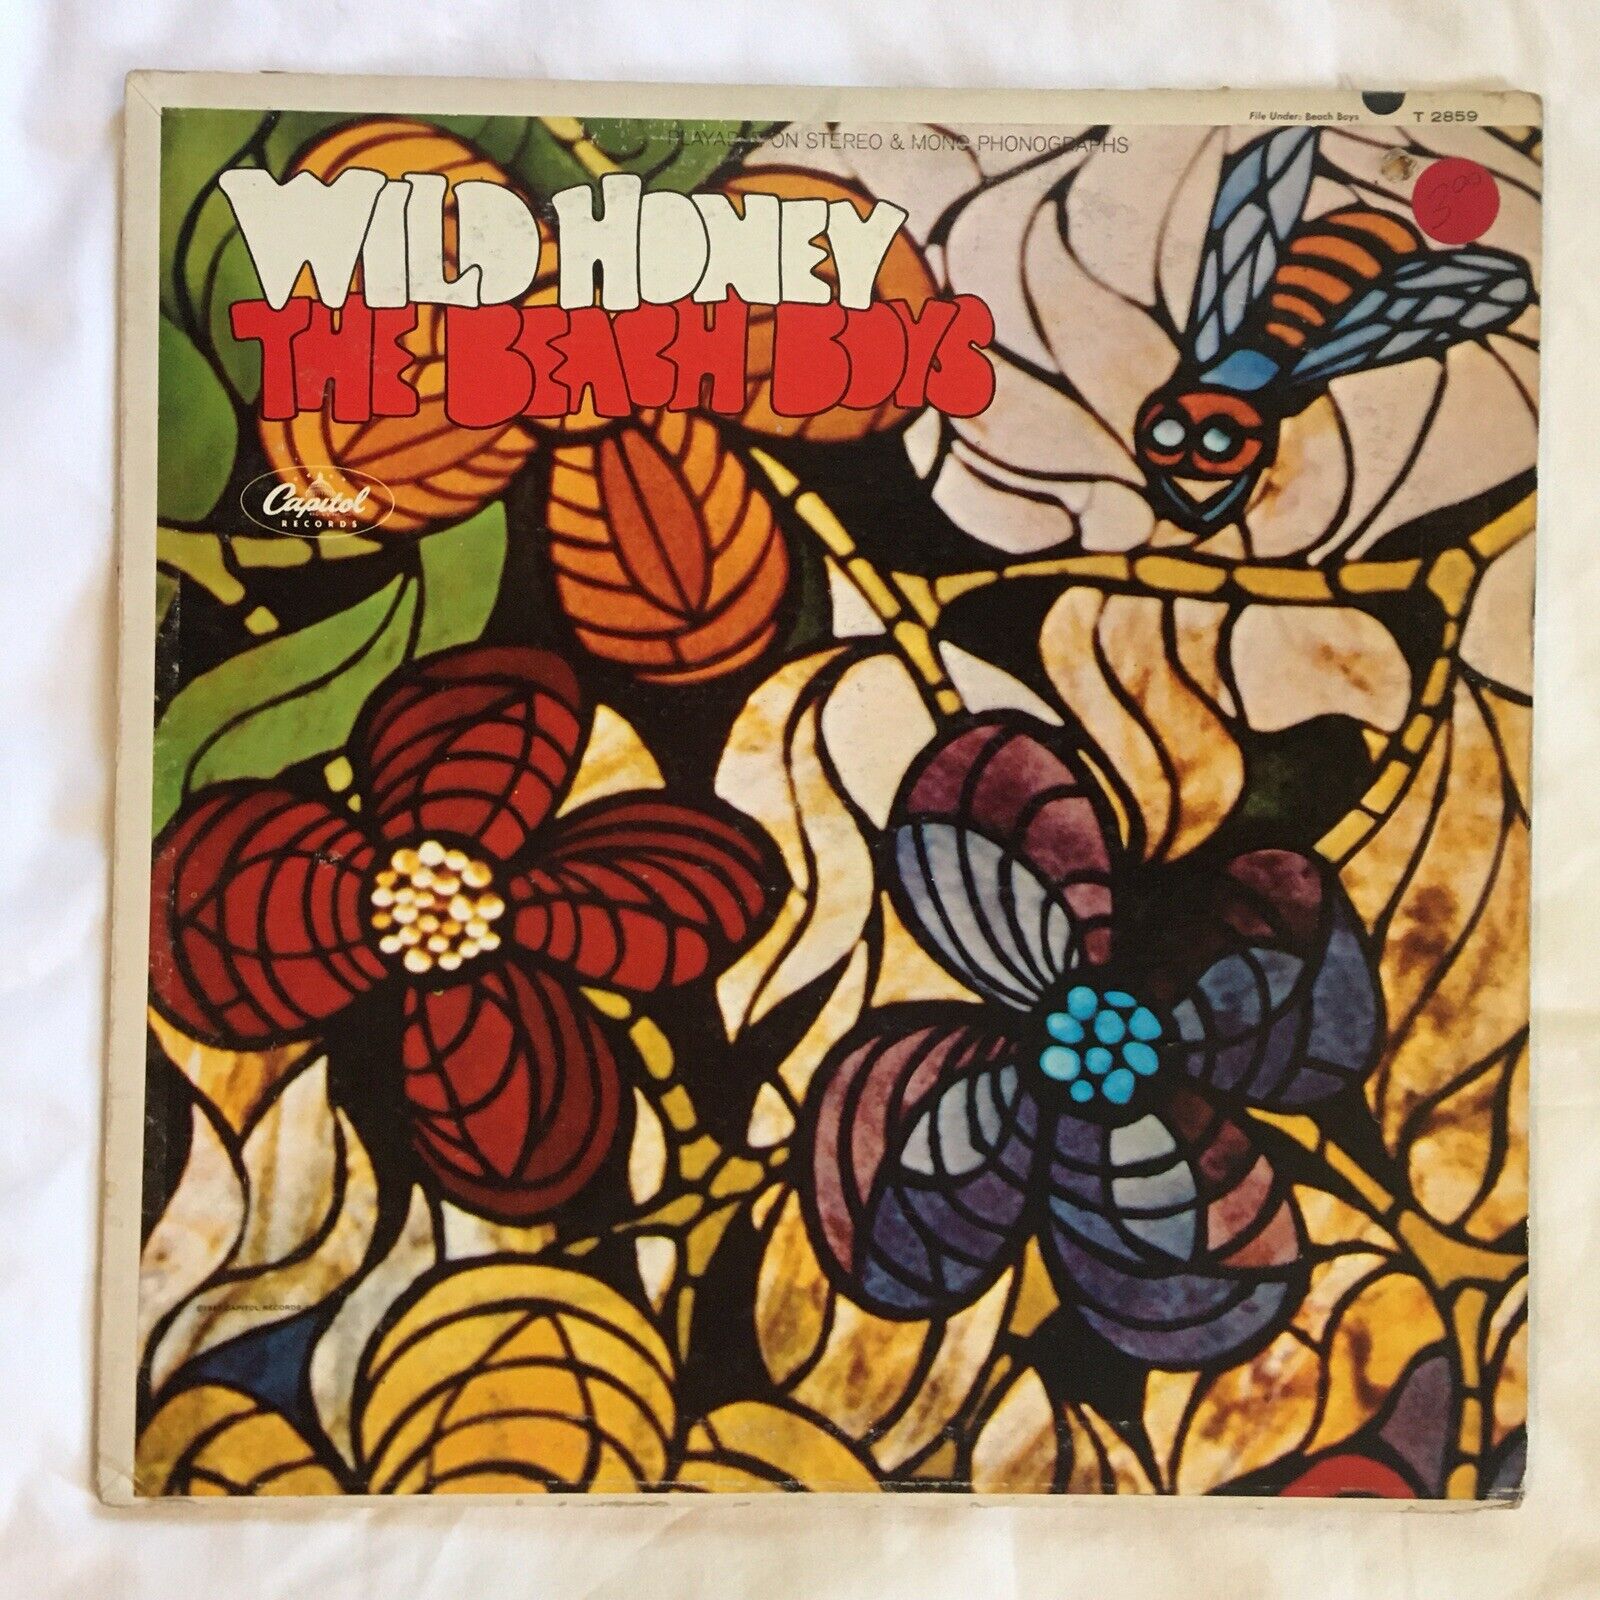 The Beach Boys Wild Honey (Vinyl LP 1967 Capitol Records T 2859) Mono